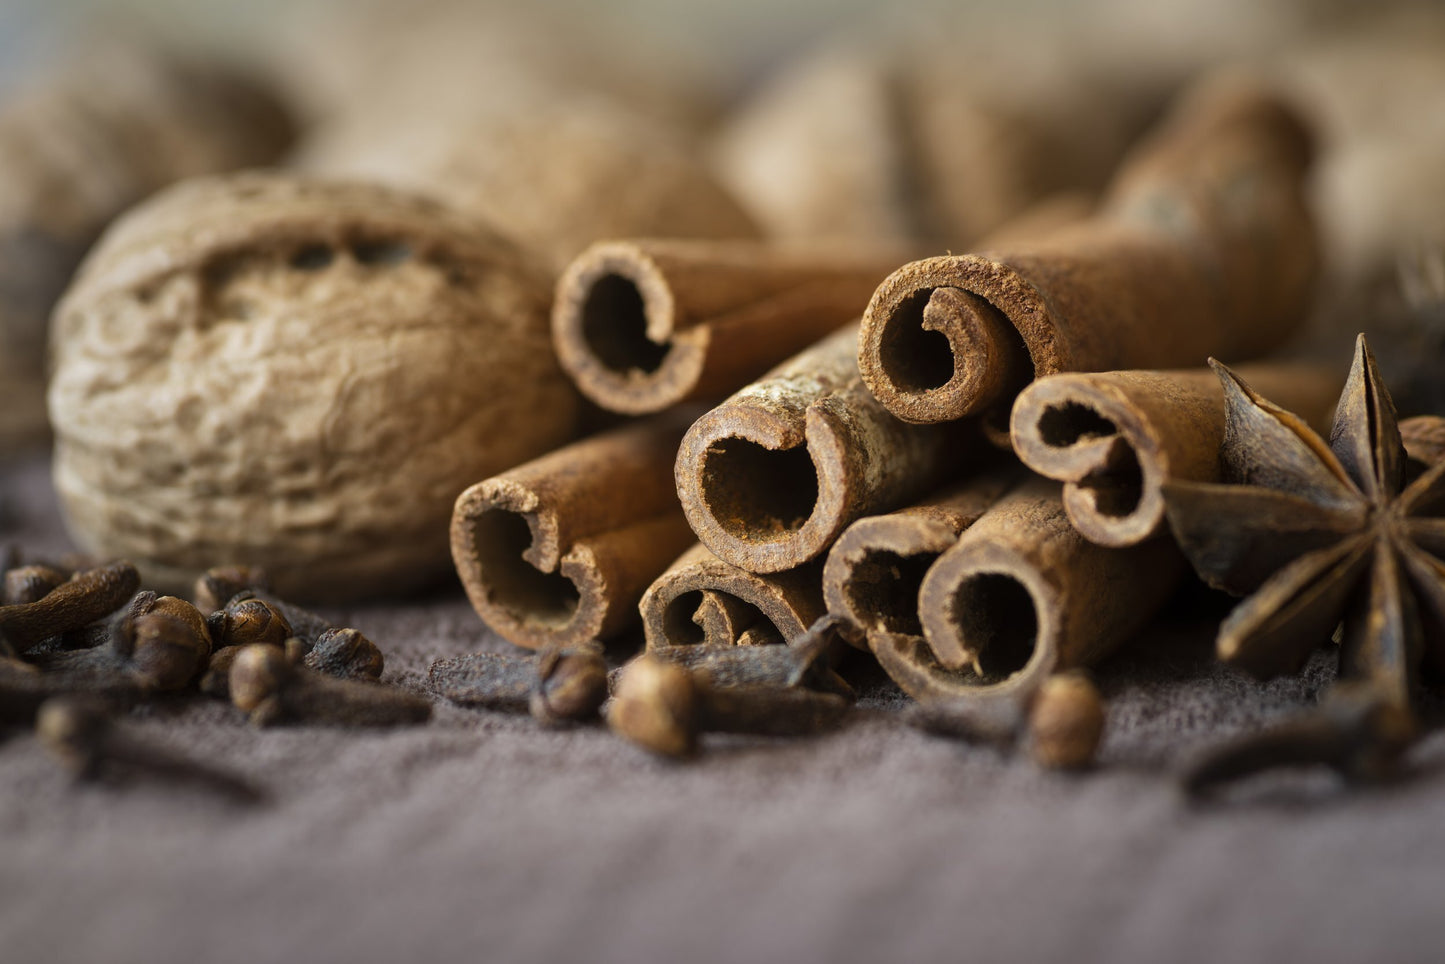 Organic Cinnamon sticks (Dalchini)